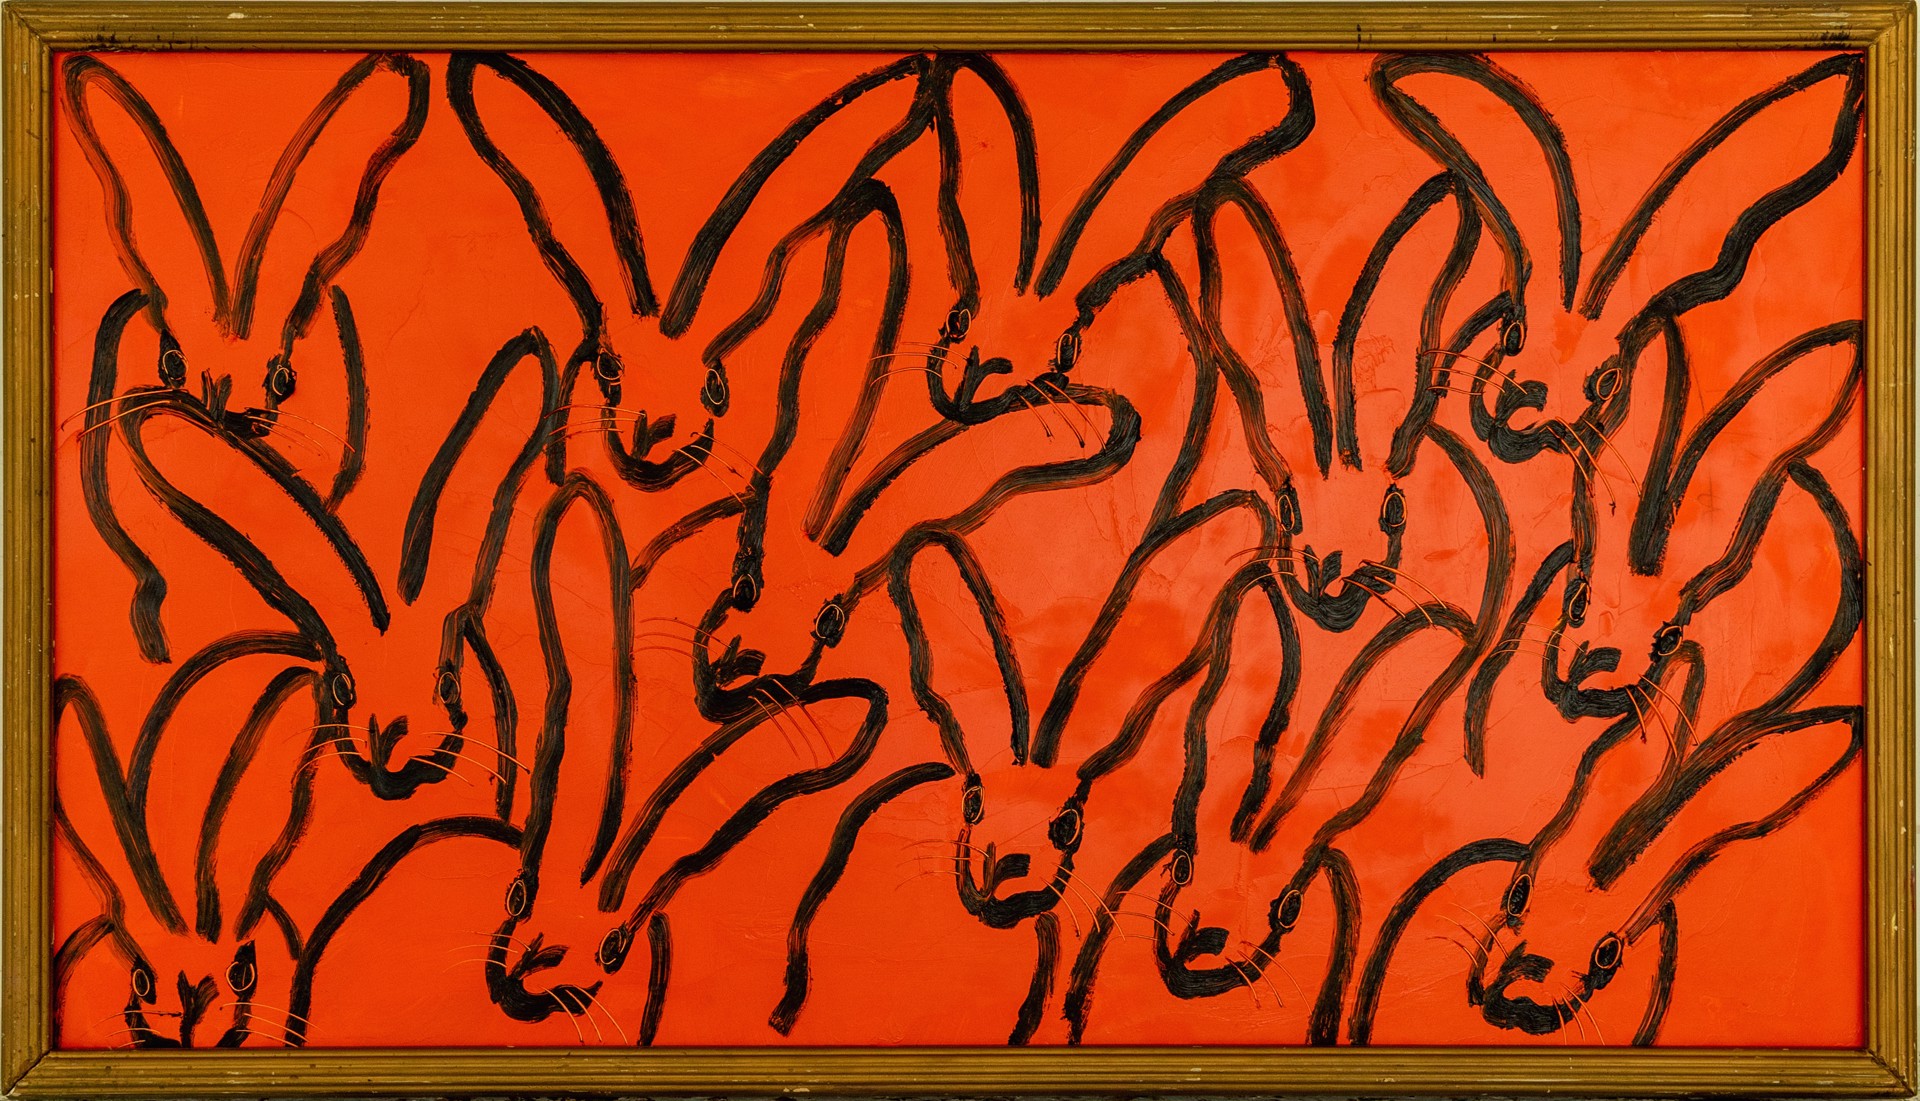 Red Rabbit by Hunt Slonem